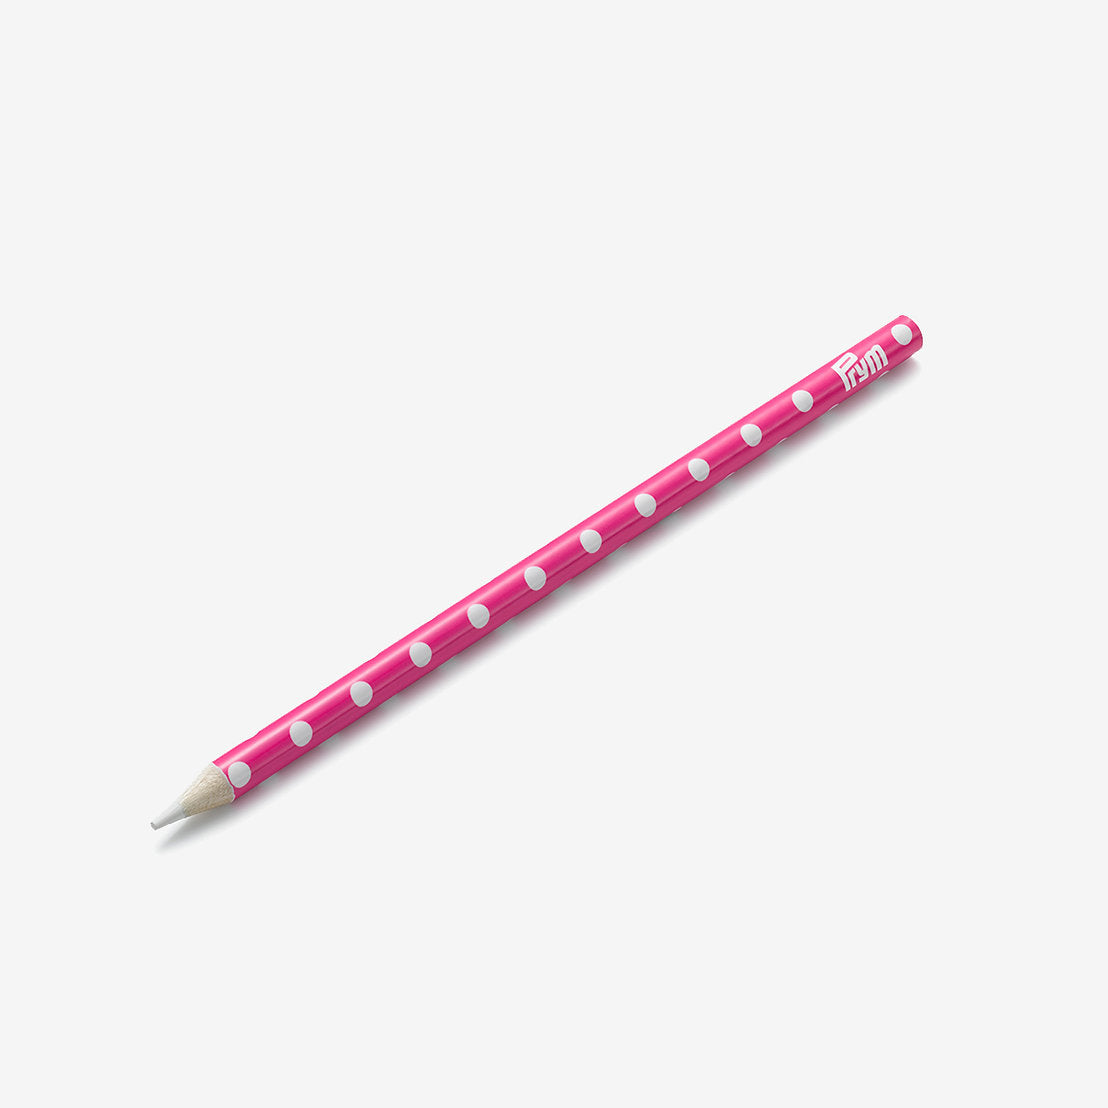 White marker pen for dark fabrics - Easy to remove and sharpen - Prym